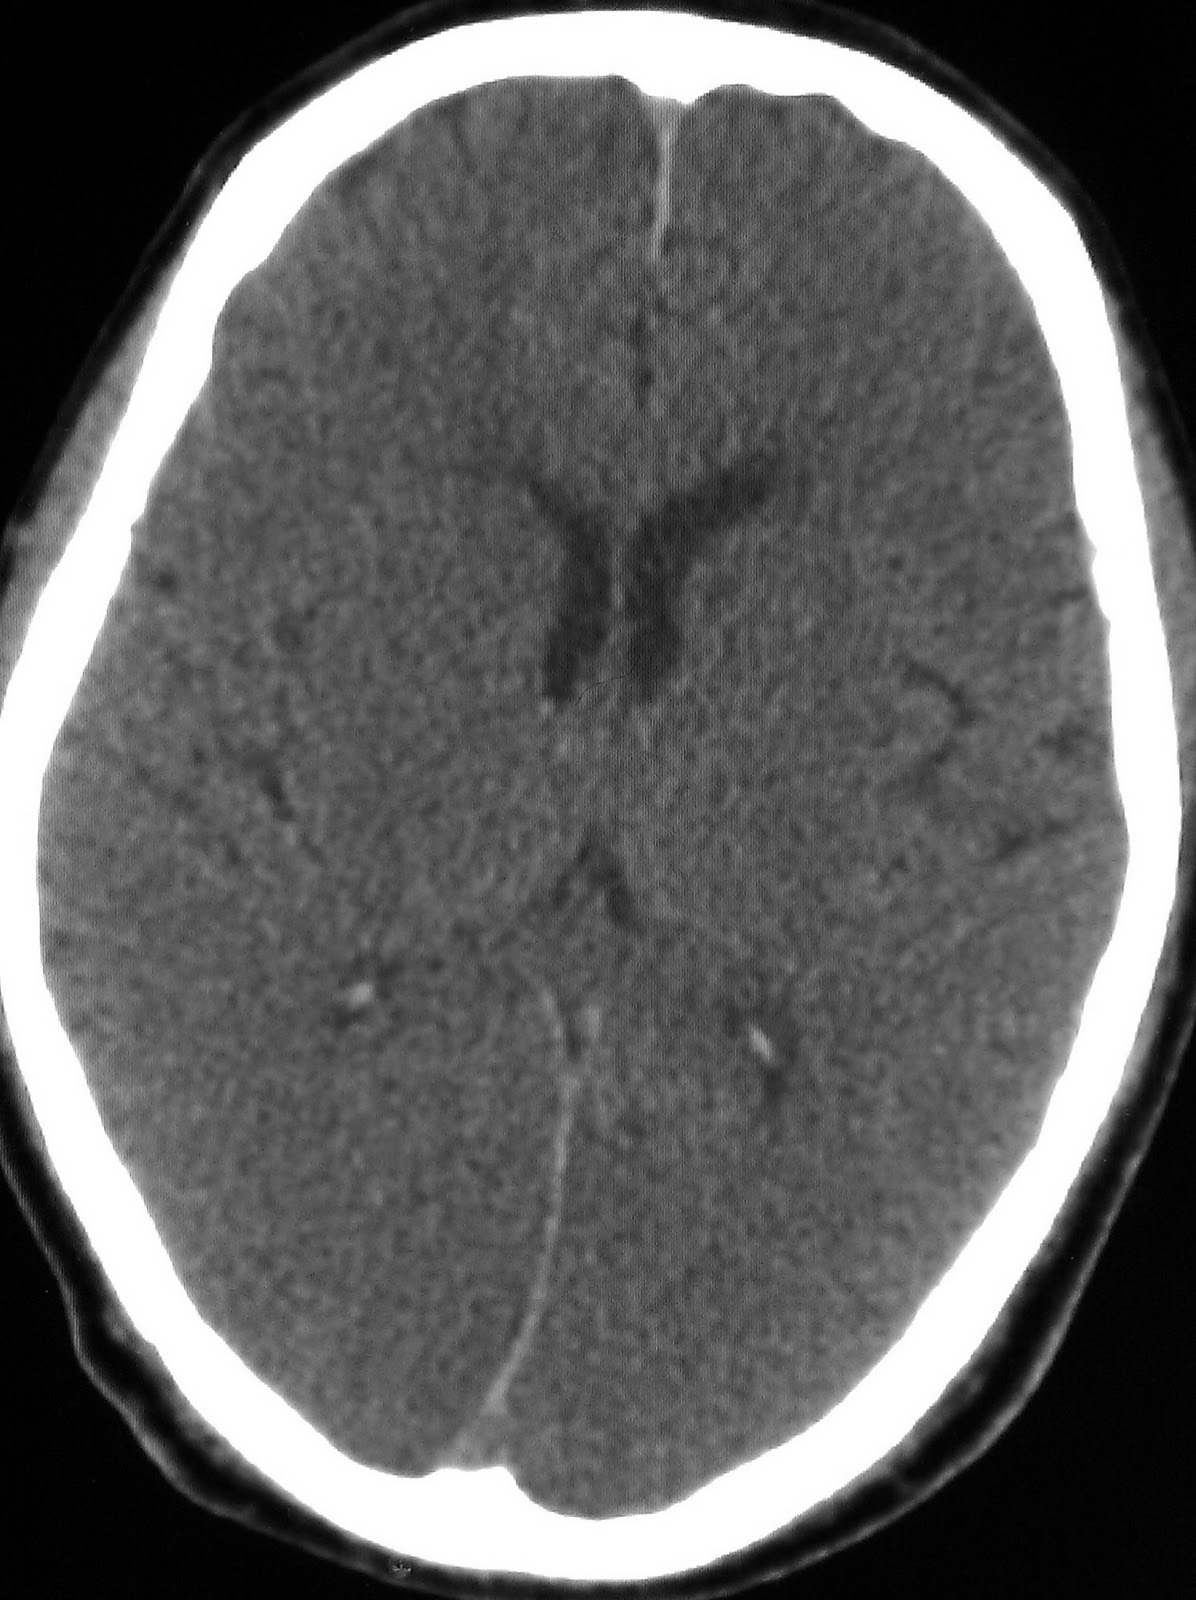 Learning Neuroradiology: Case 93 - Diffuse Hypoxic Brain Injury